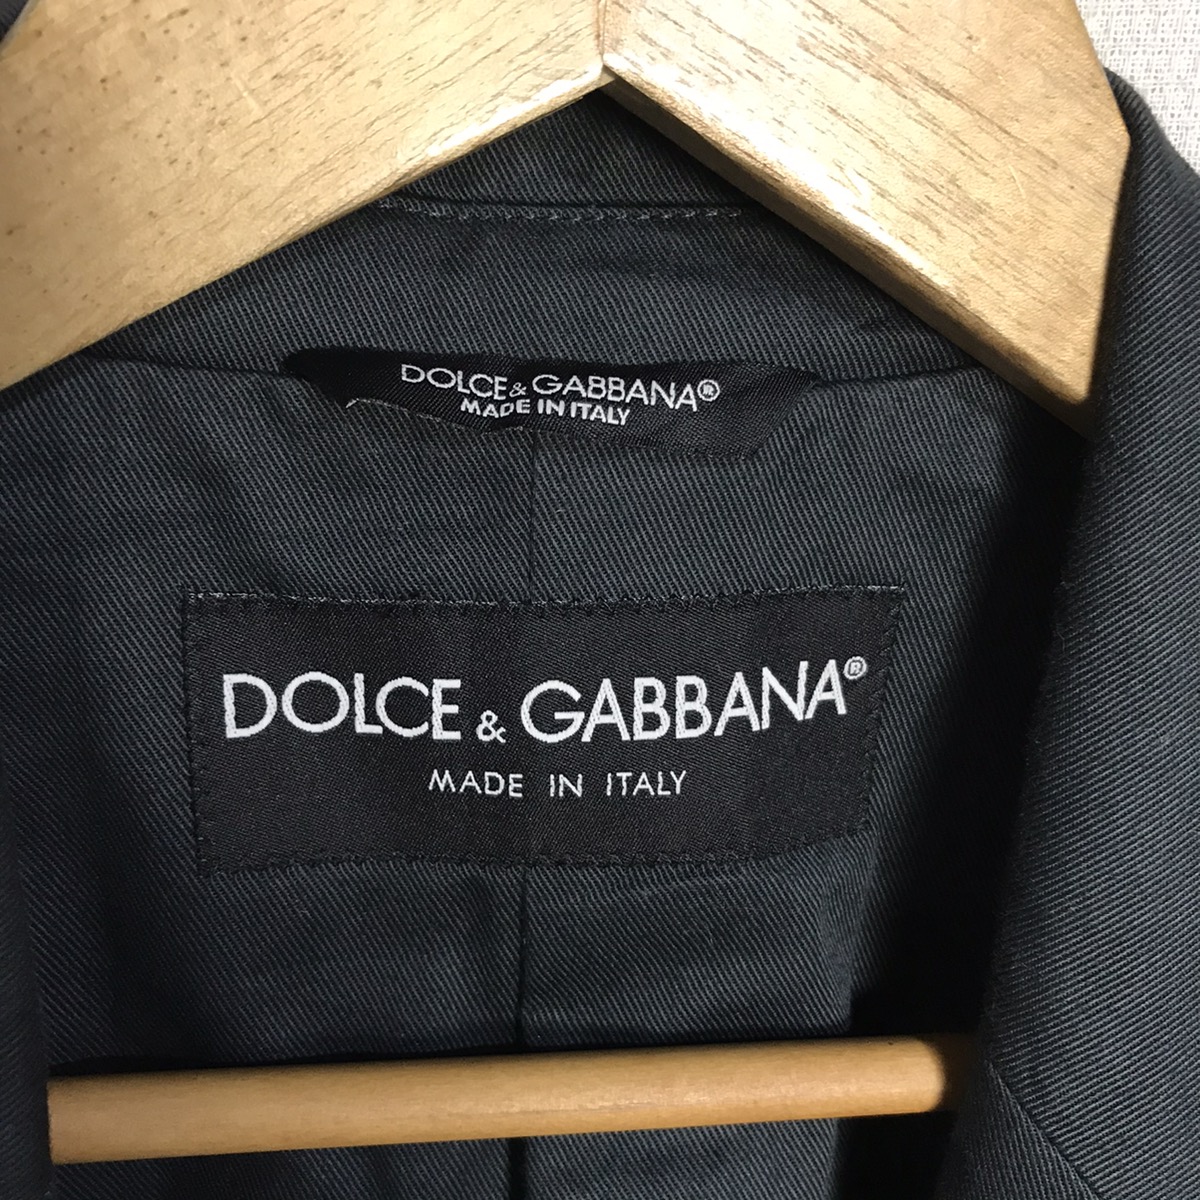 Dolce & gabbana embroid logo cotton blazer - 6